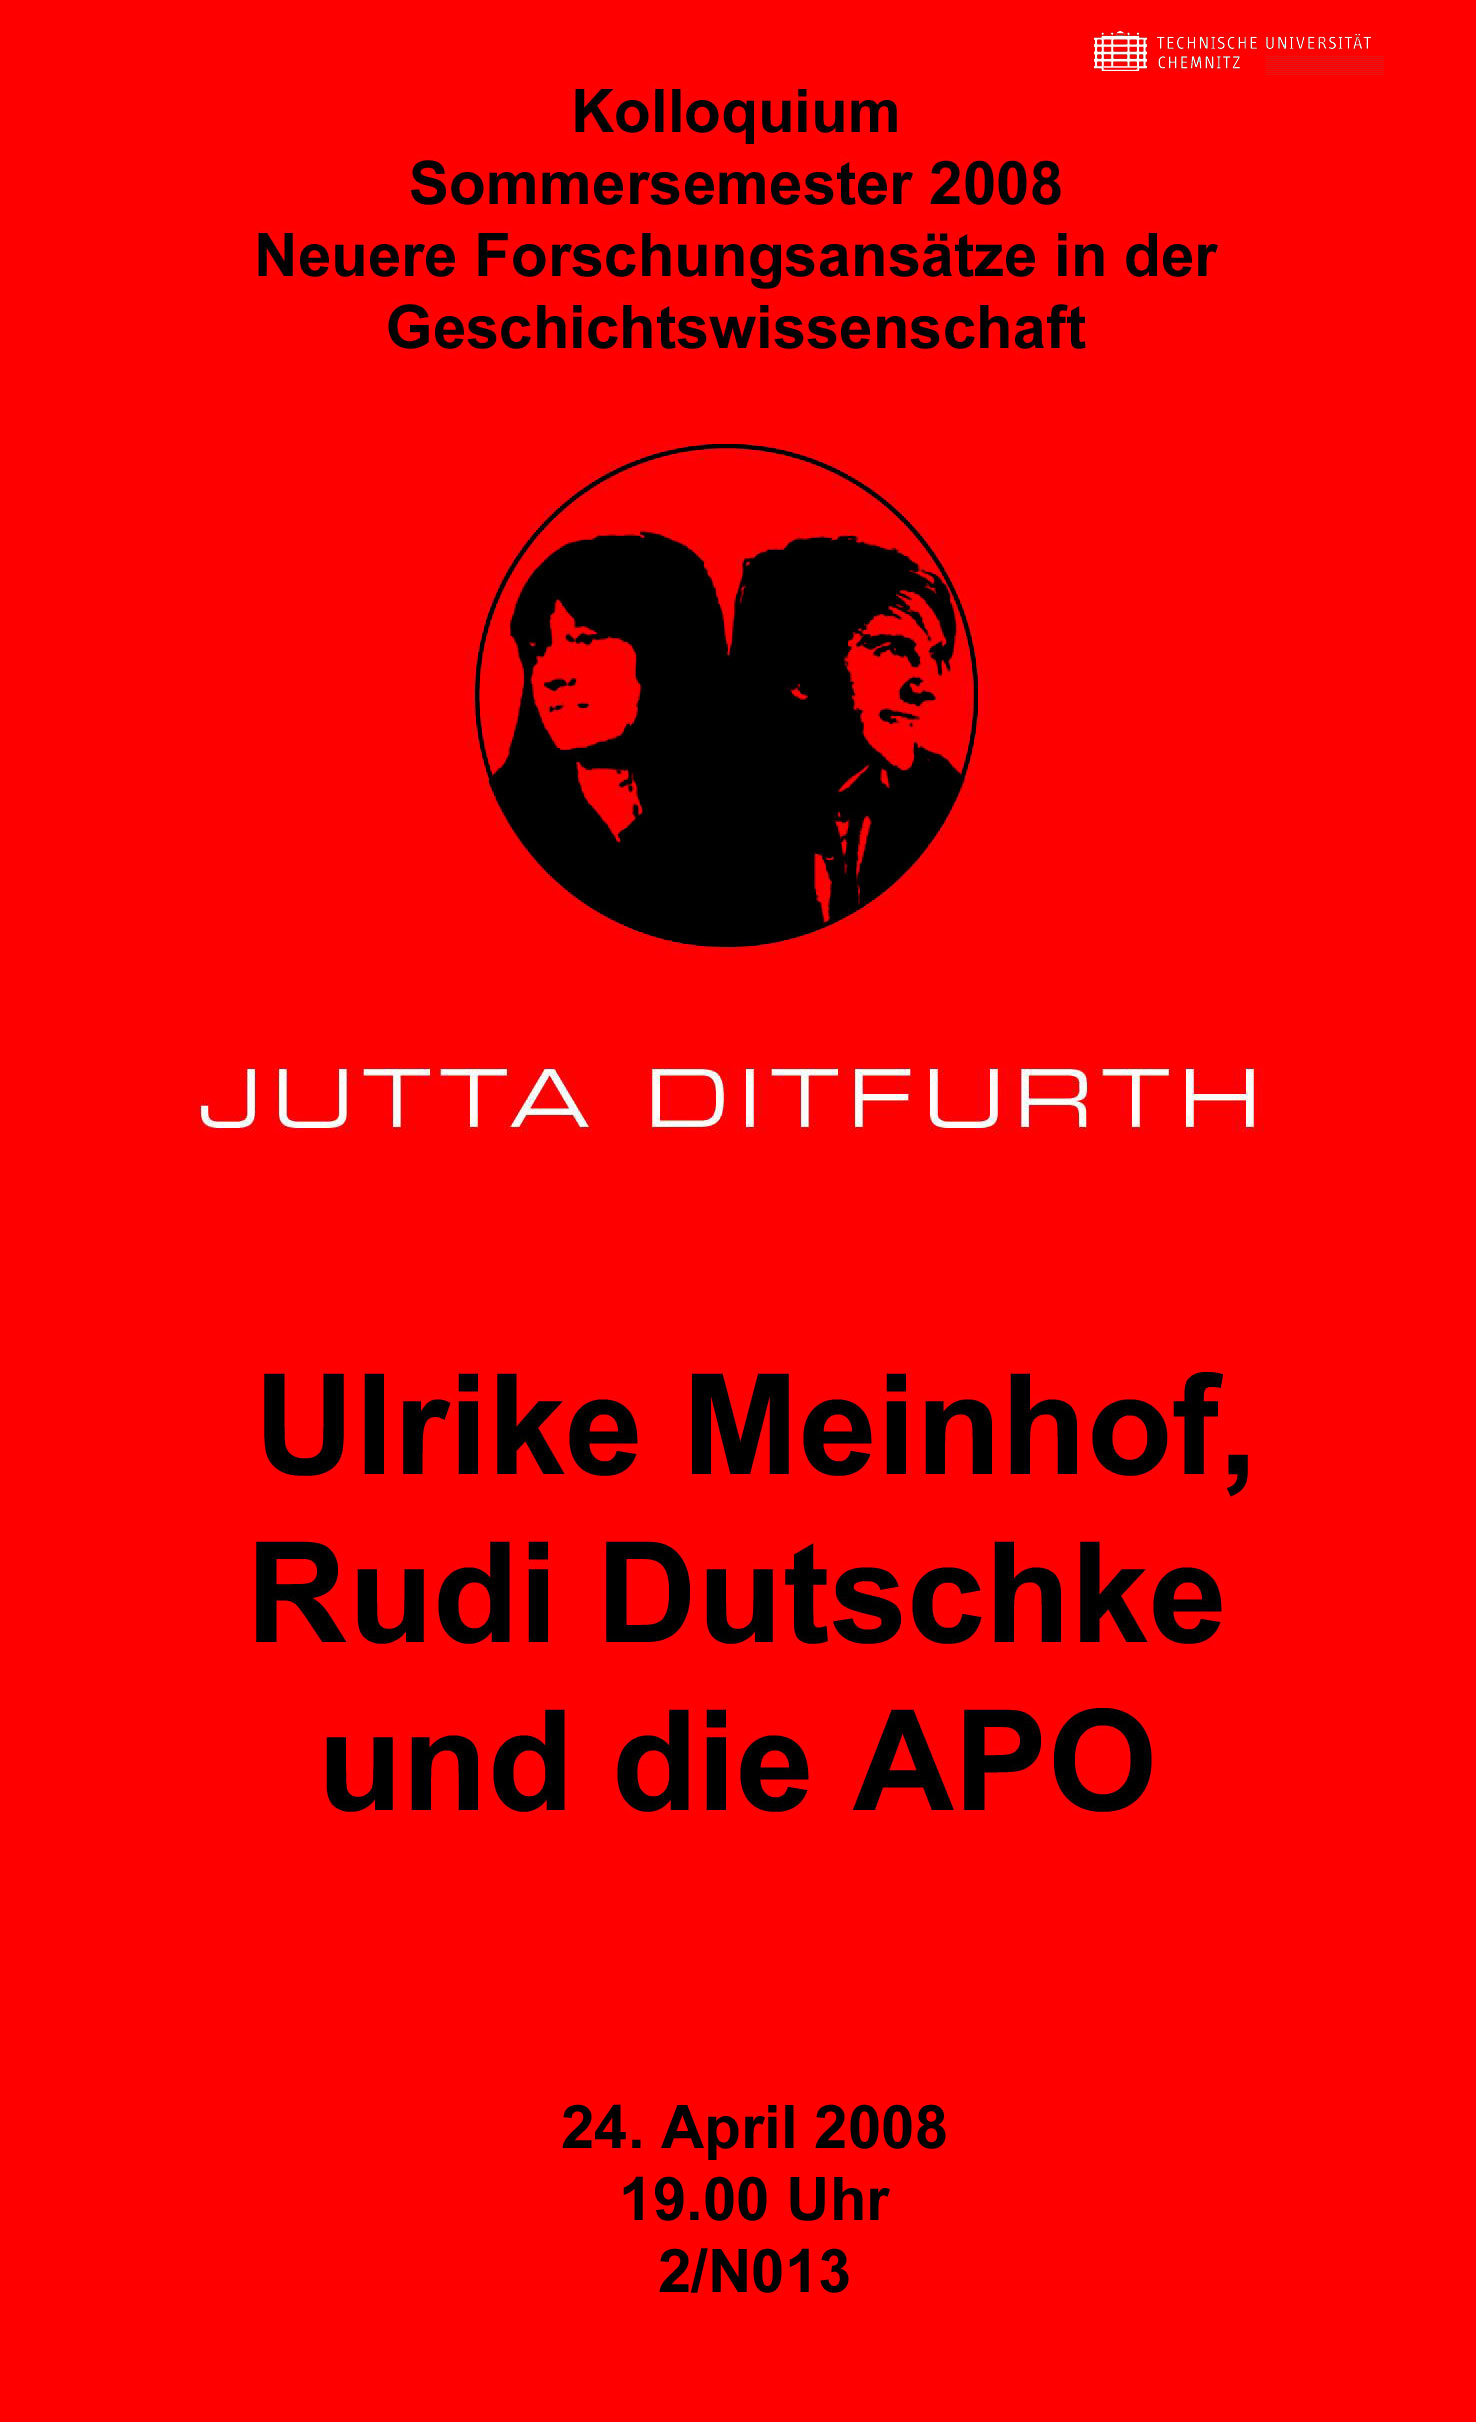  - Plakat-Meinhof-Dutschke-APO-Chemnitz